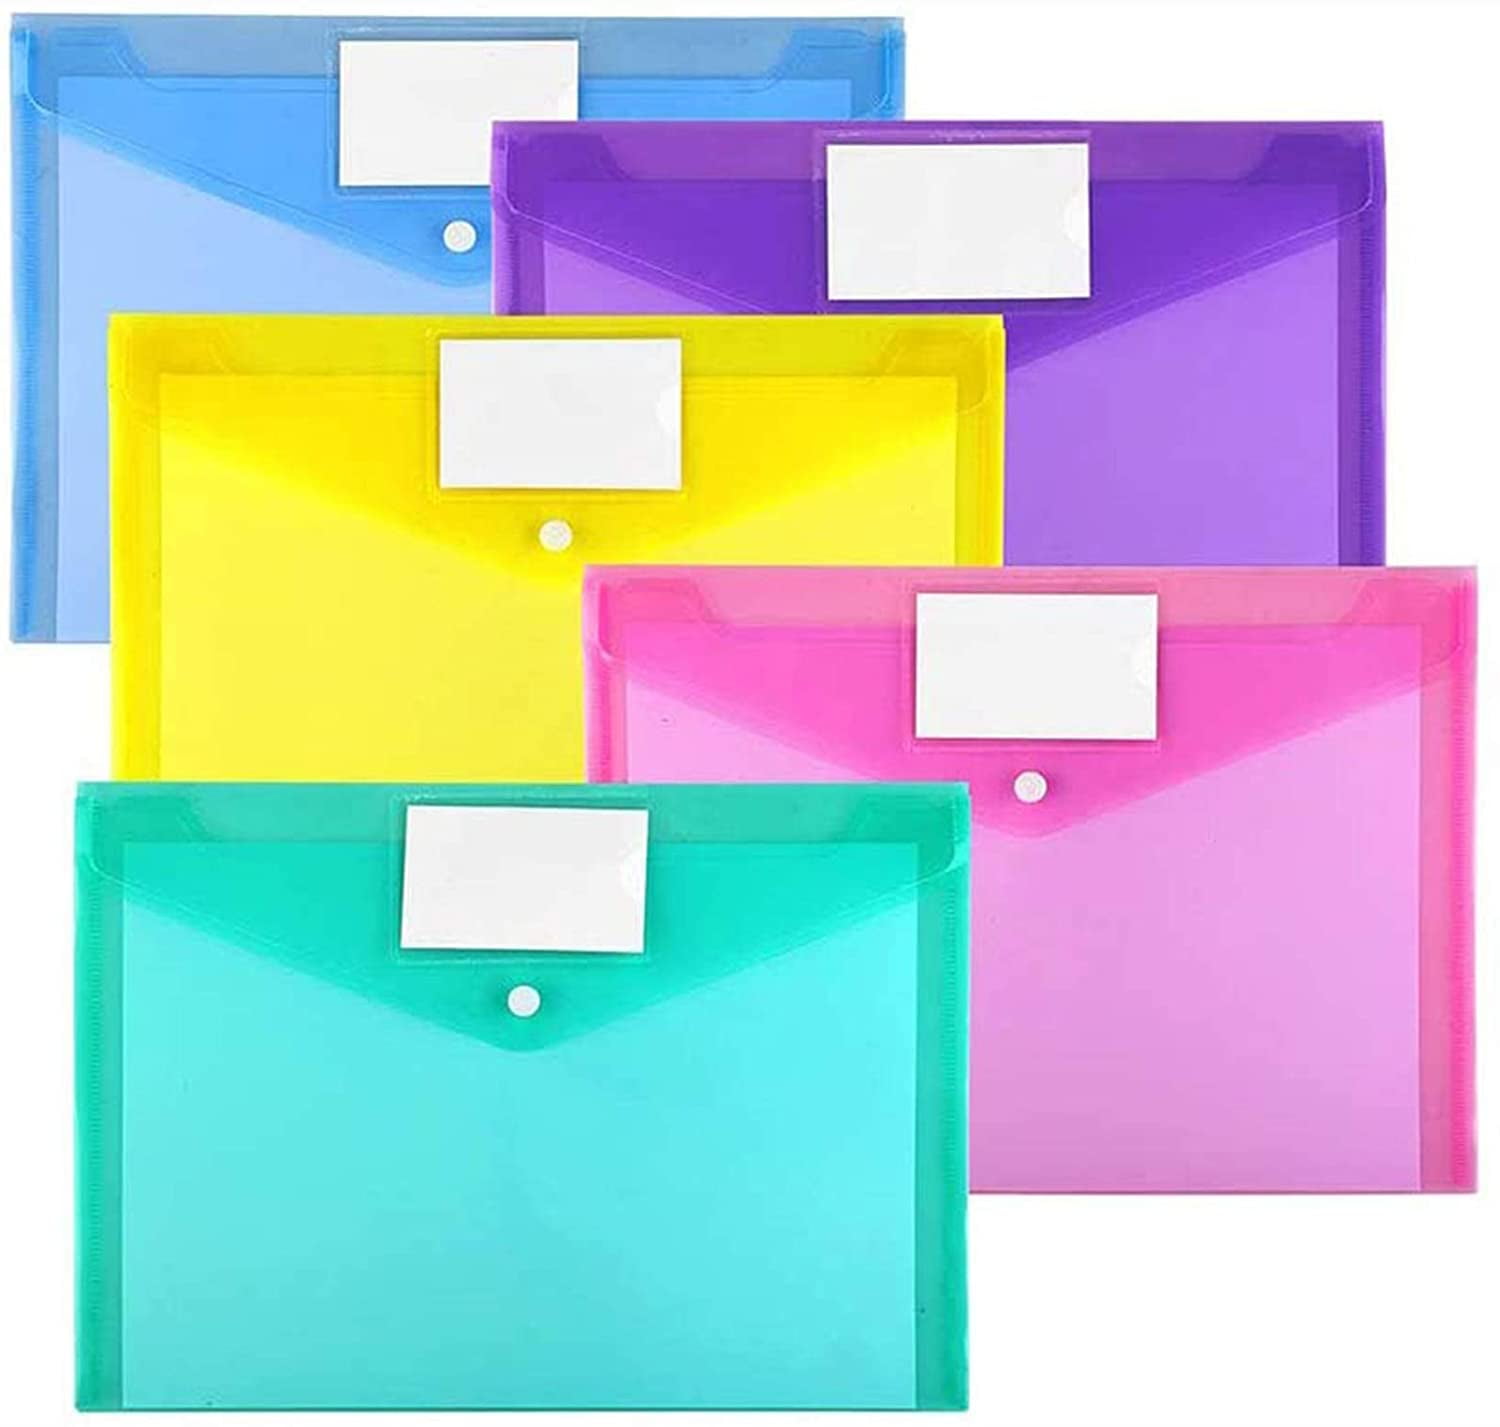 Details about   10Pcs Plastic Filing Envelopes,A4 Size File Bags Document Folders Document with